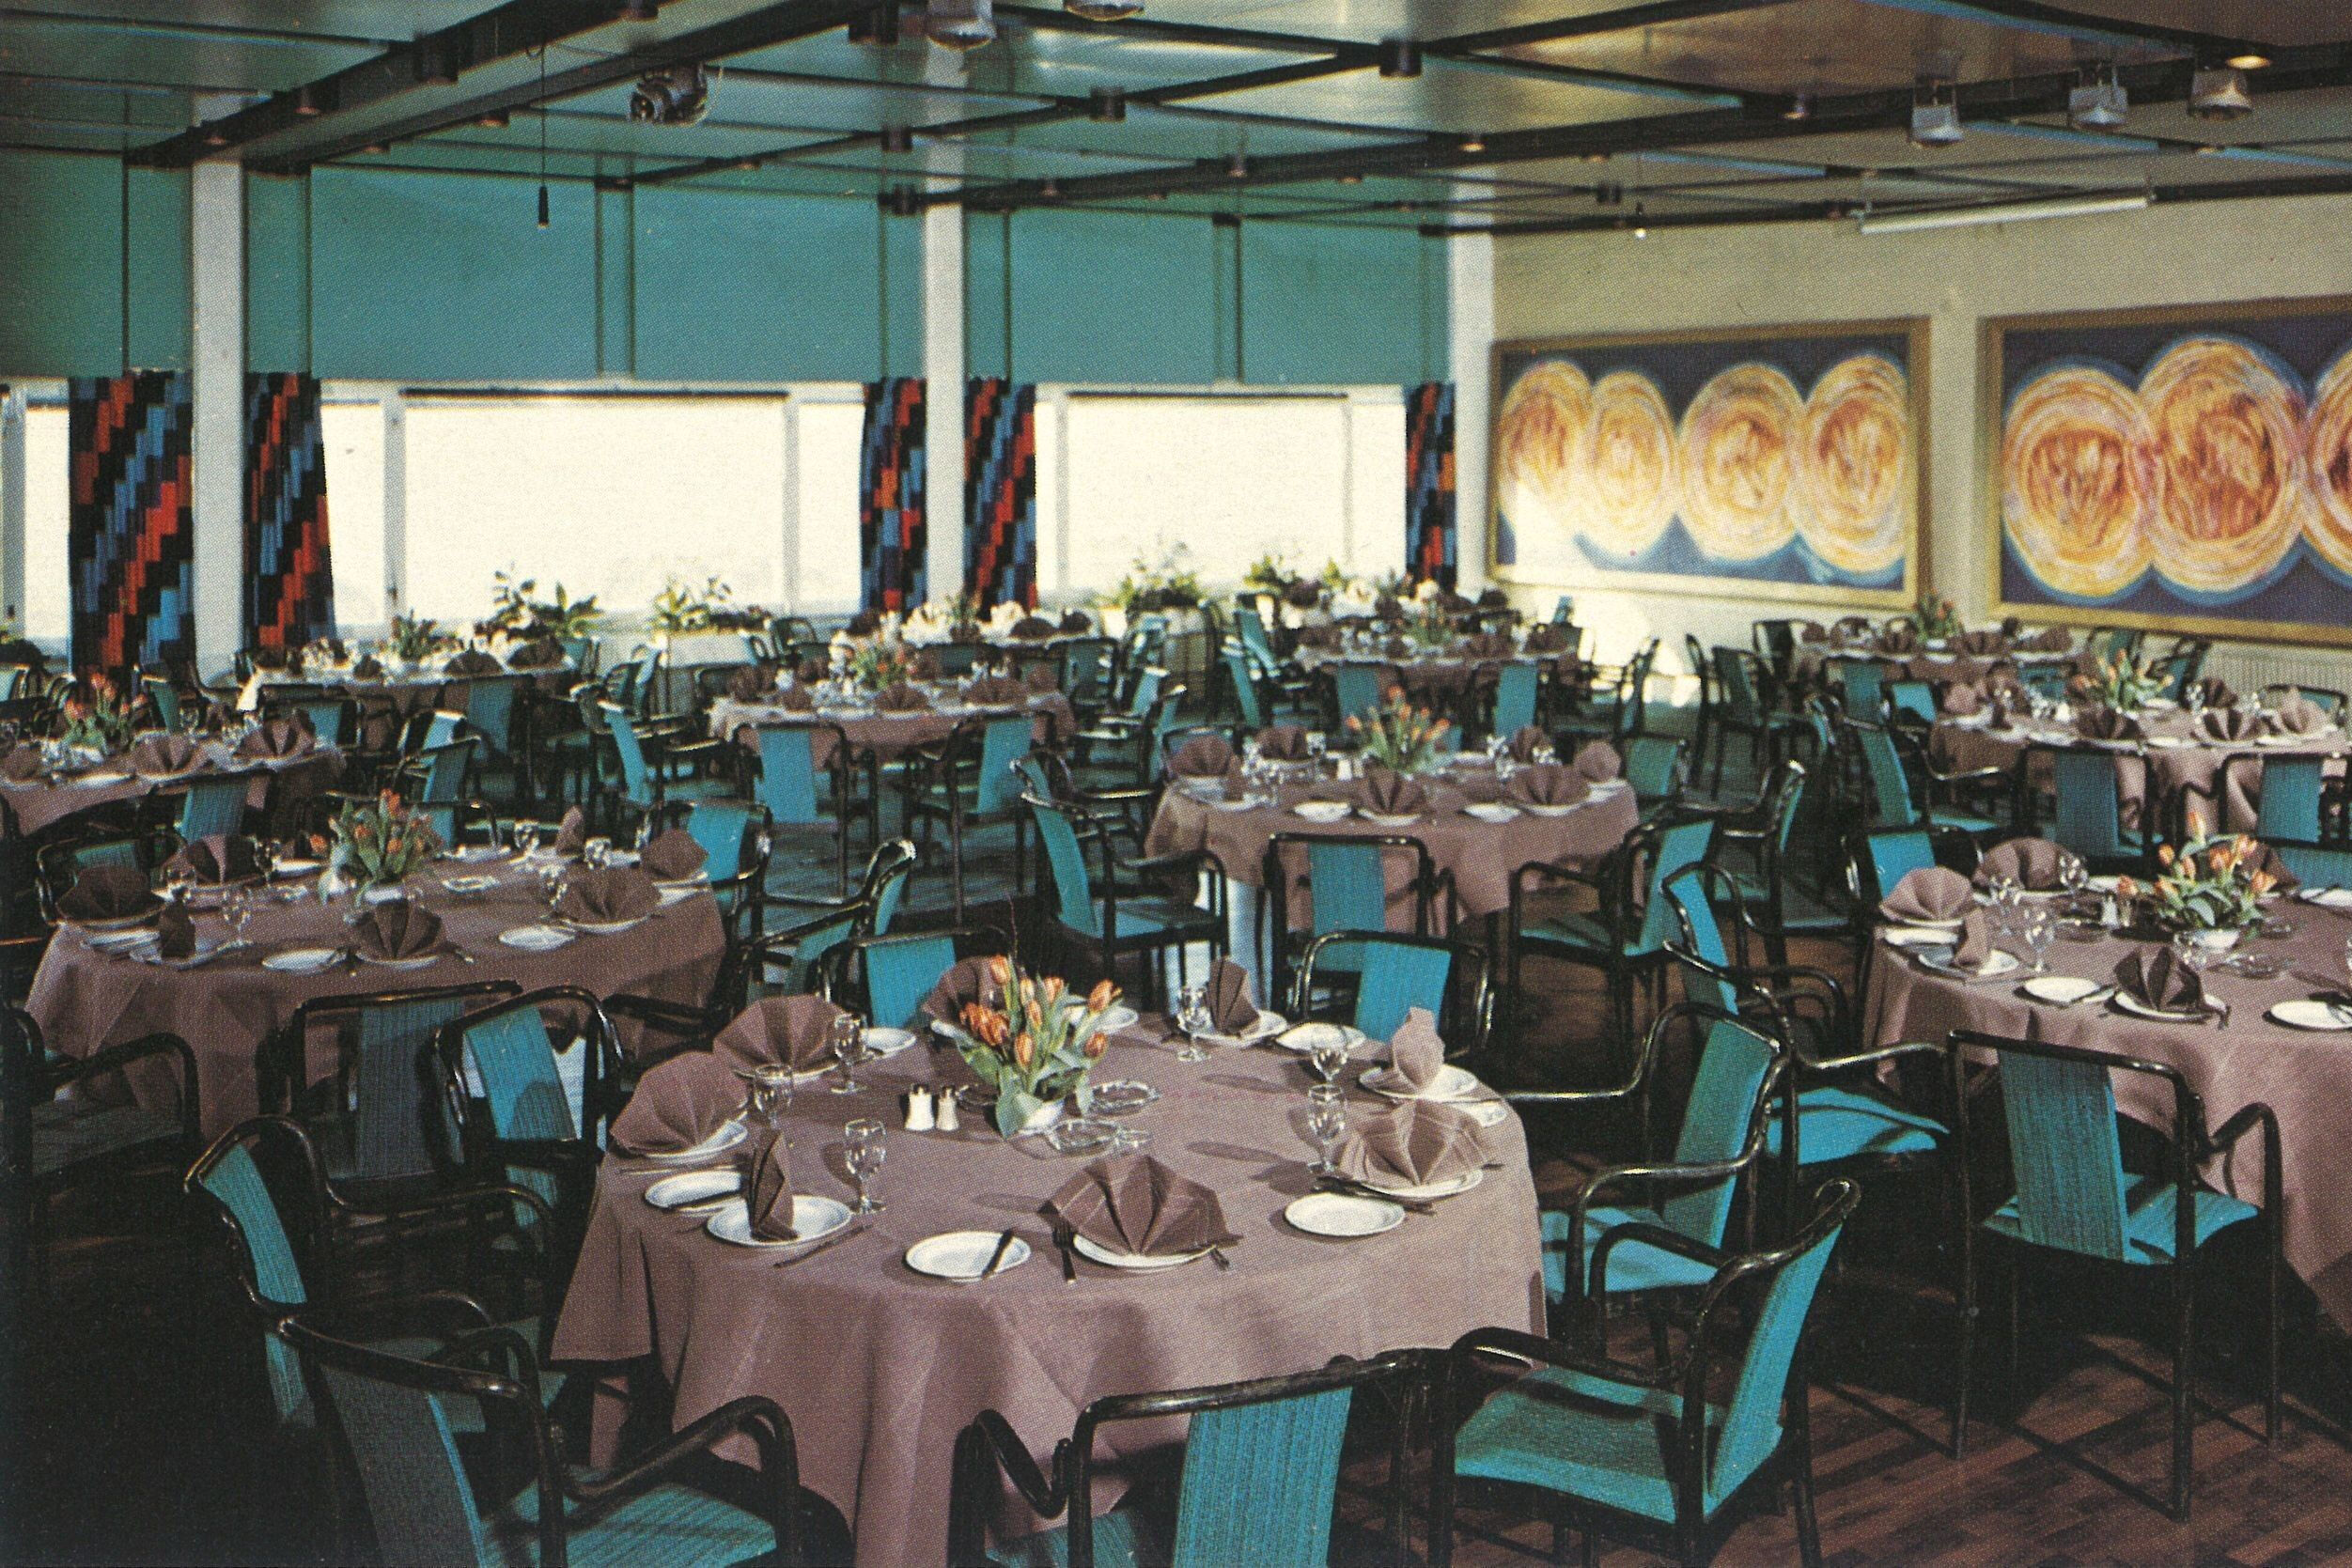 Middagsdukning i Restaurang Tylöhus 1970-talet